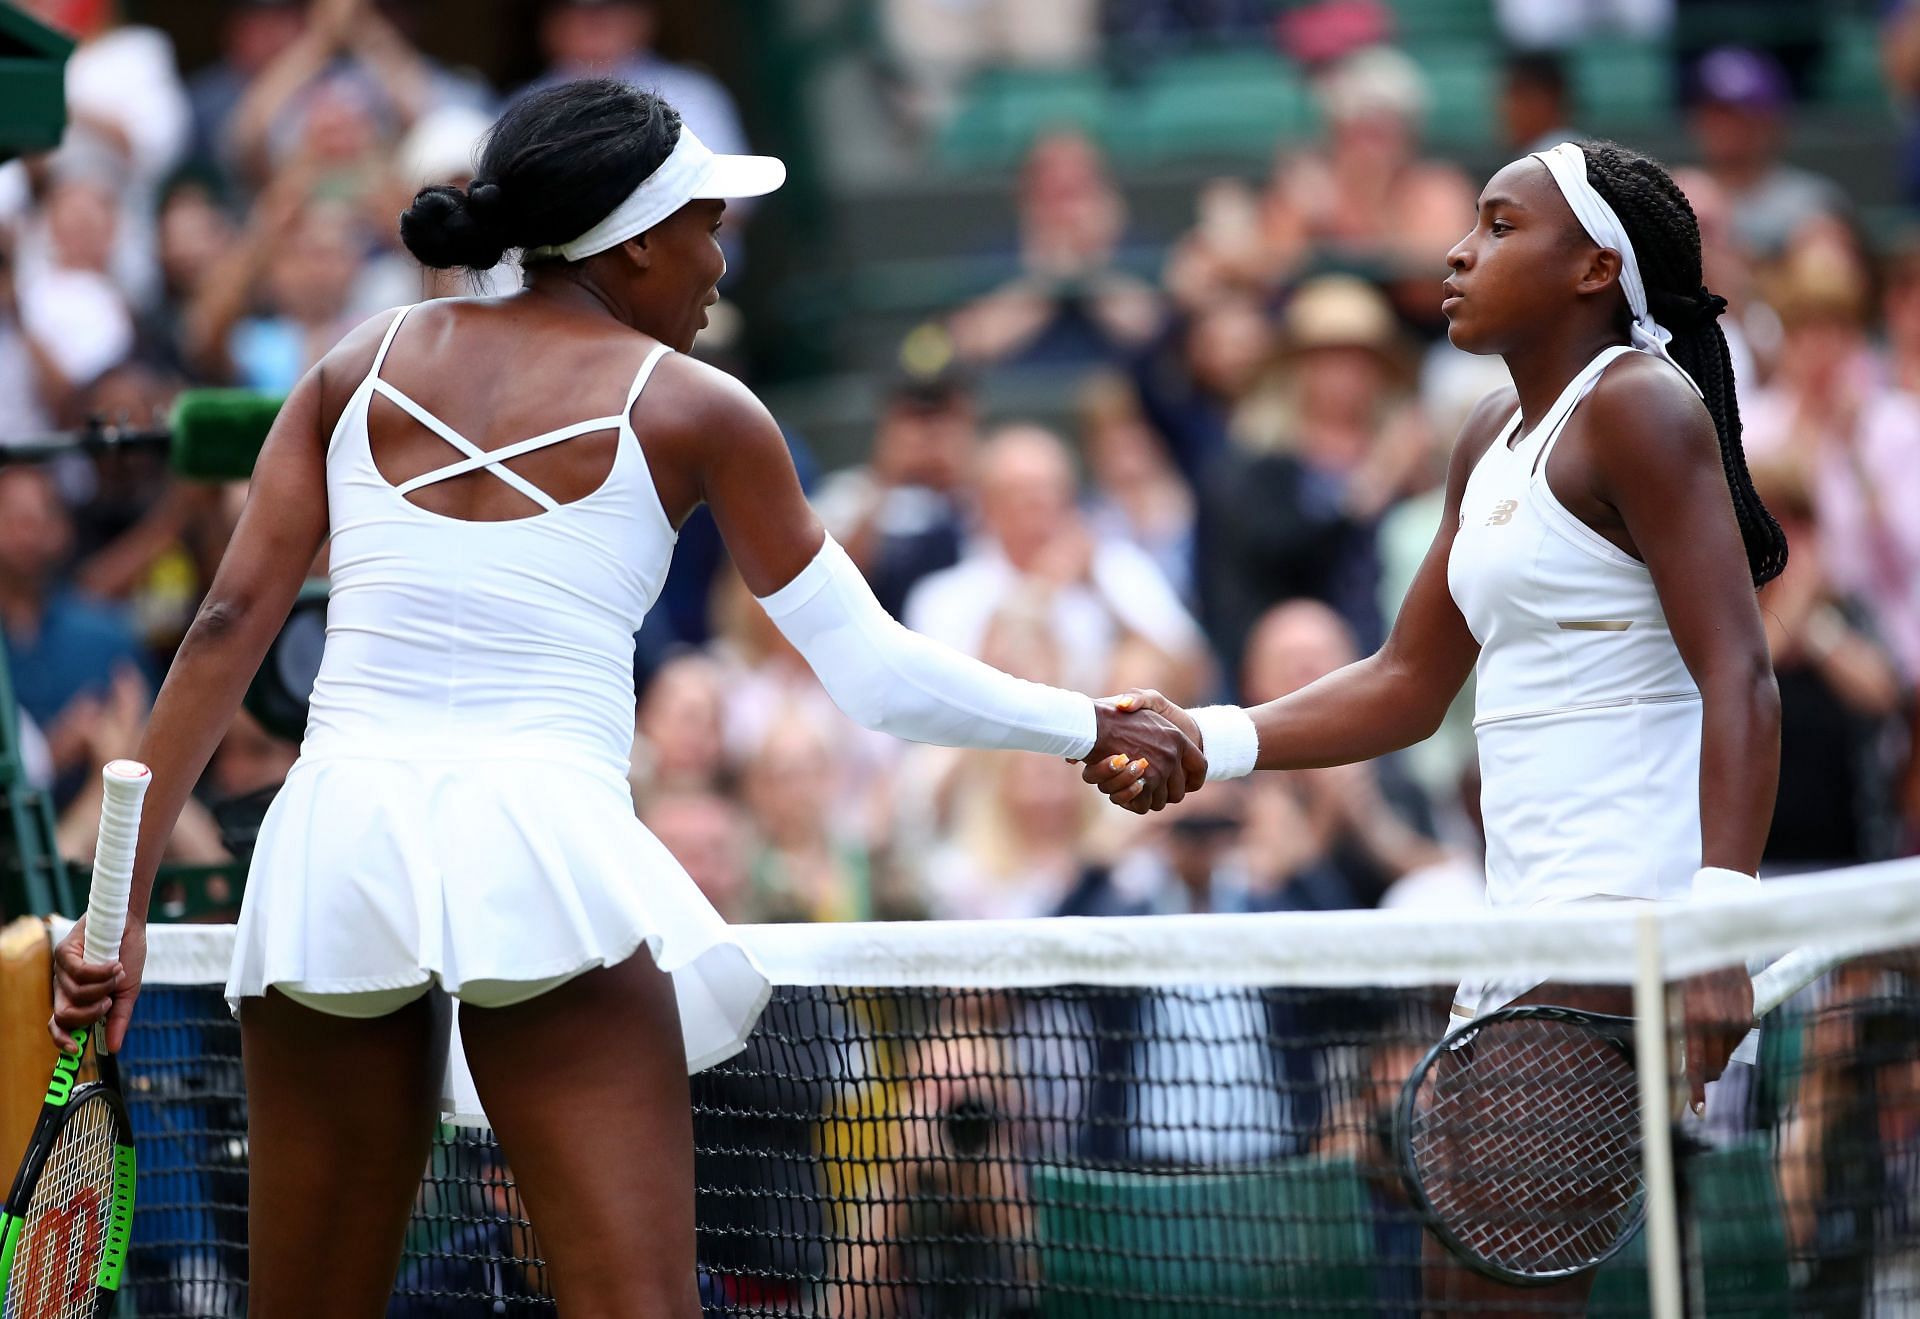 Coco Gauff upset Venus Williams at Wimbledon 2019